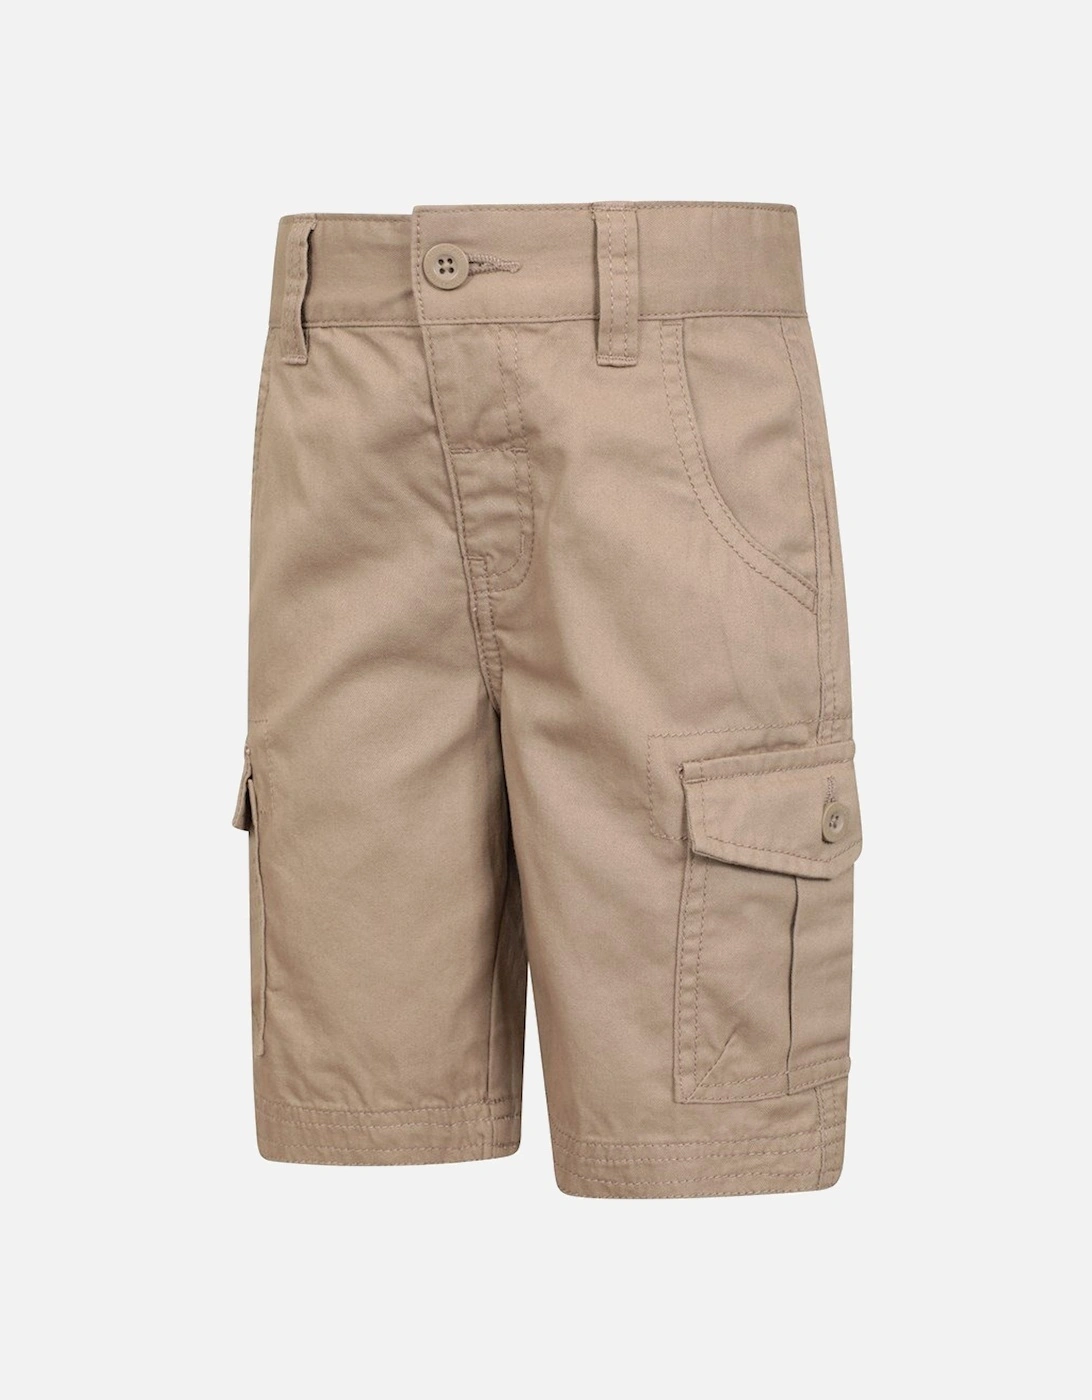 Childrens/Kids Cargo Shorts